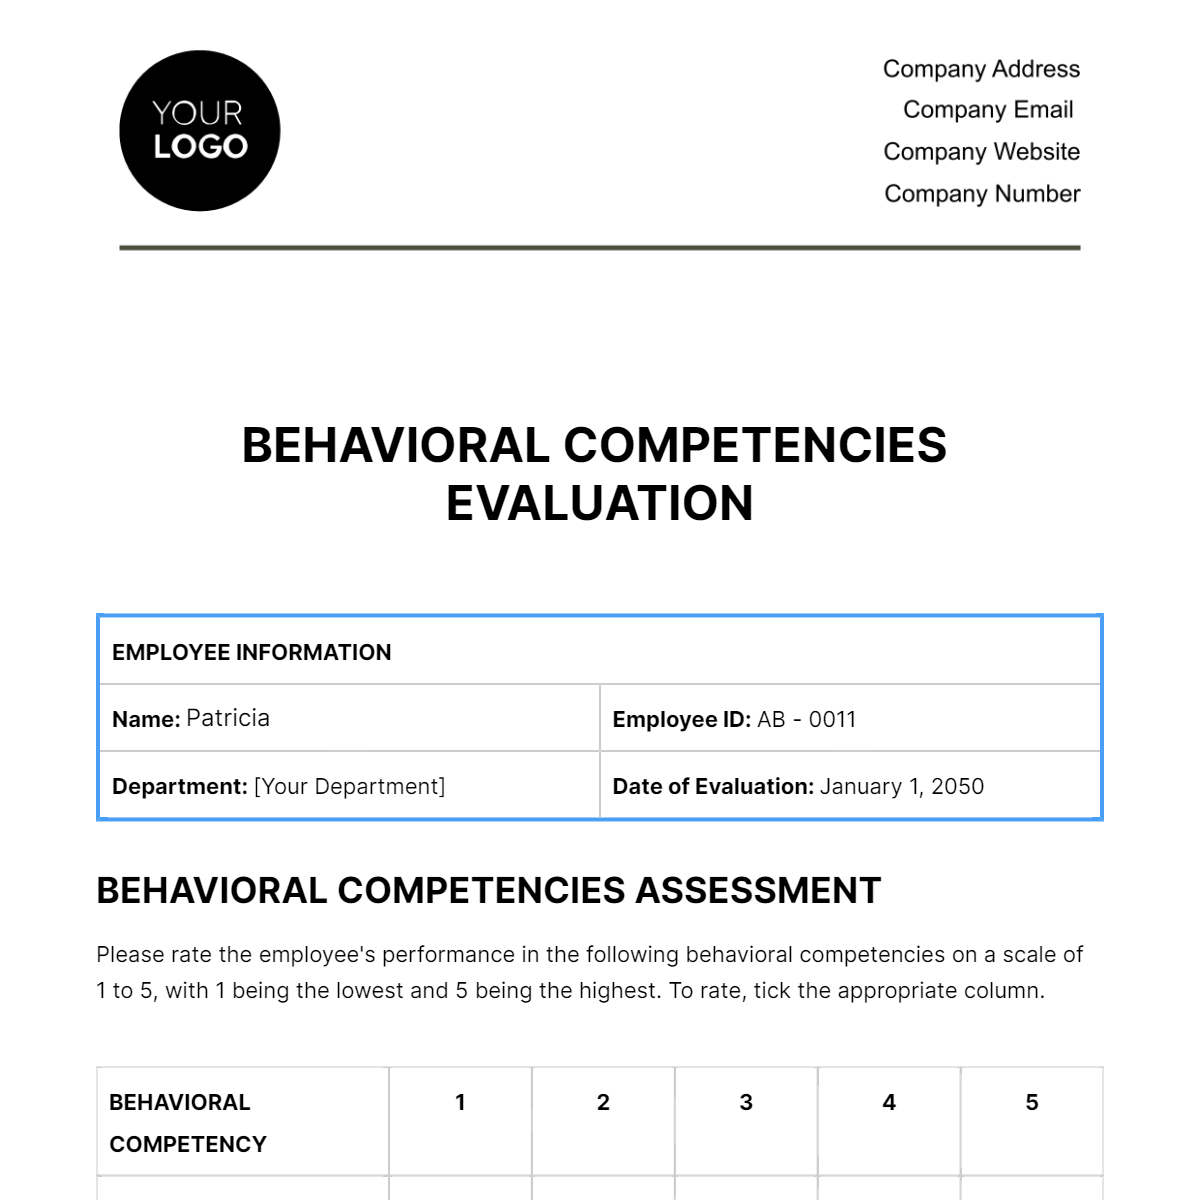 Behavioral Competencies Evaluation HR Template